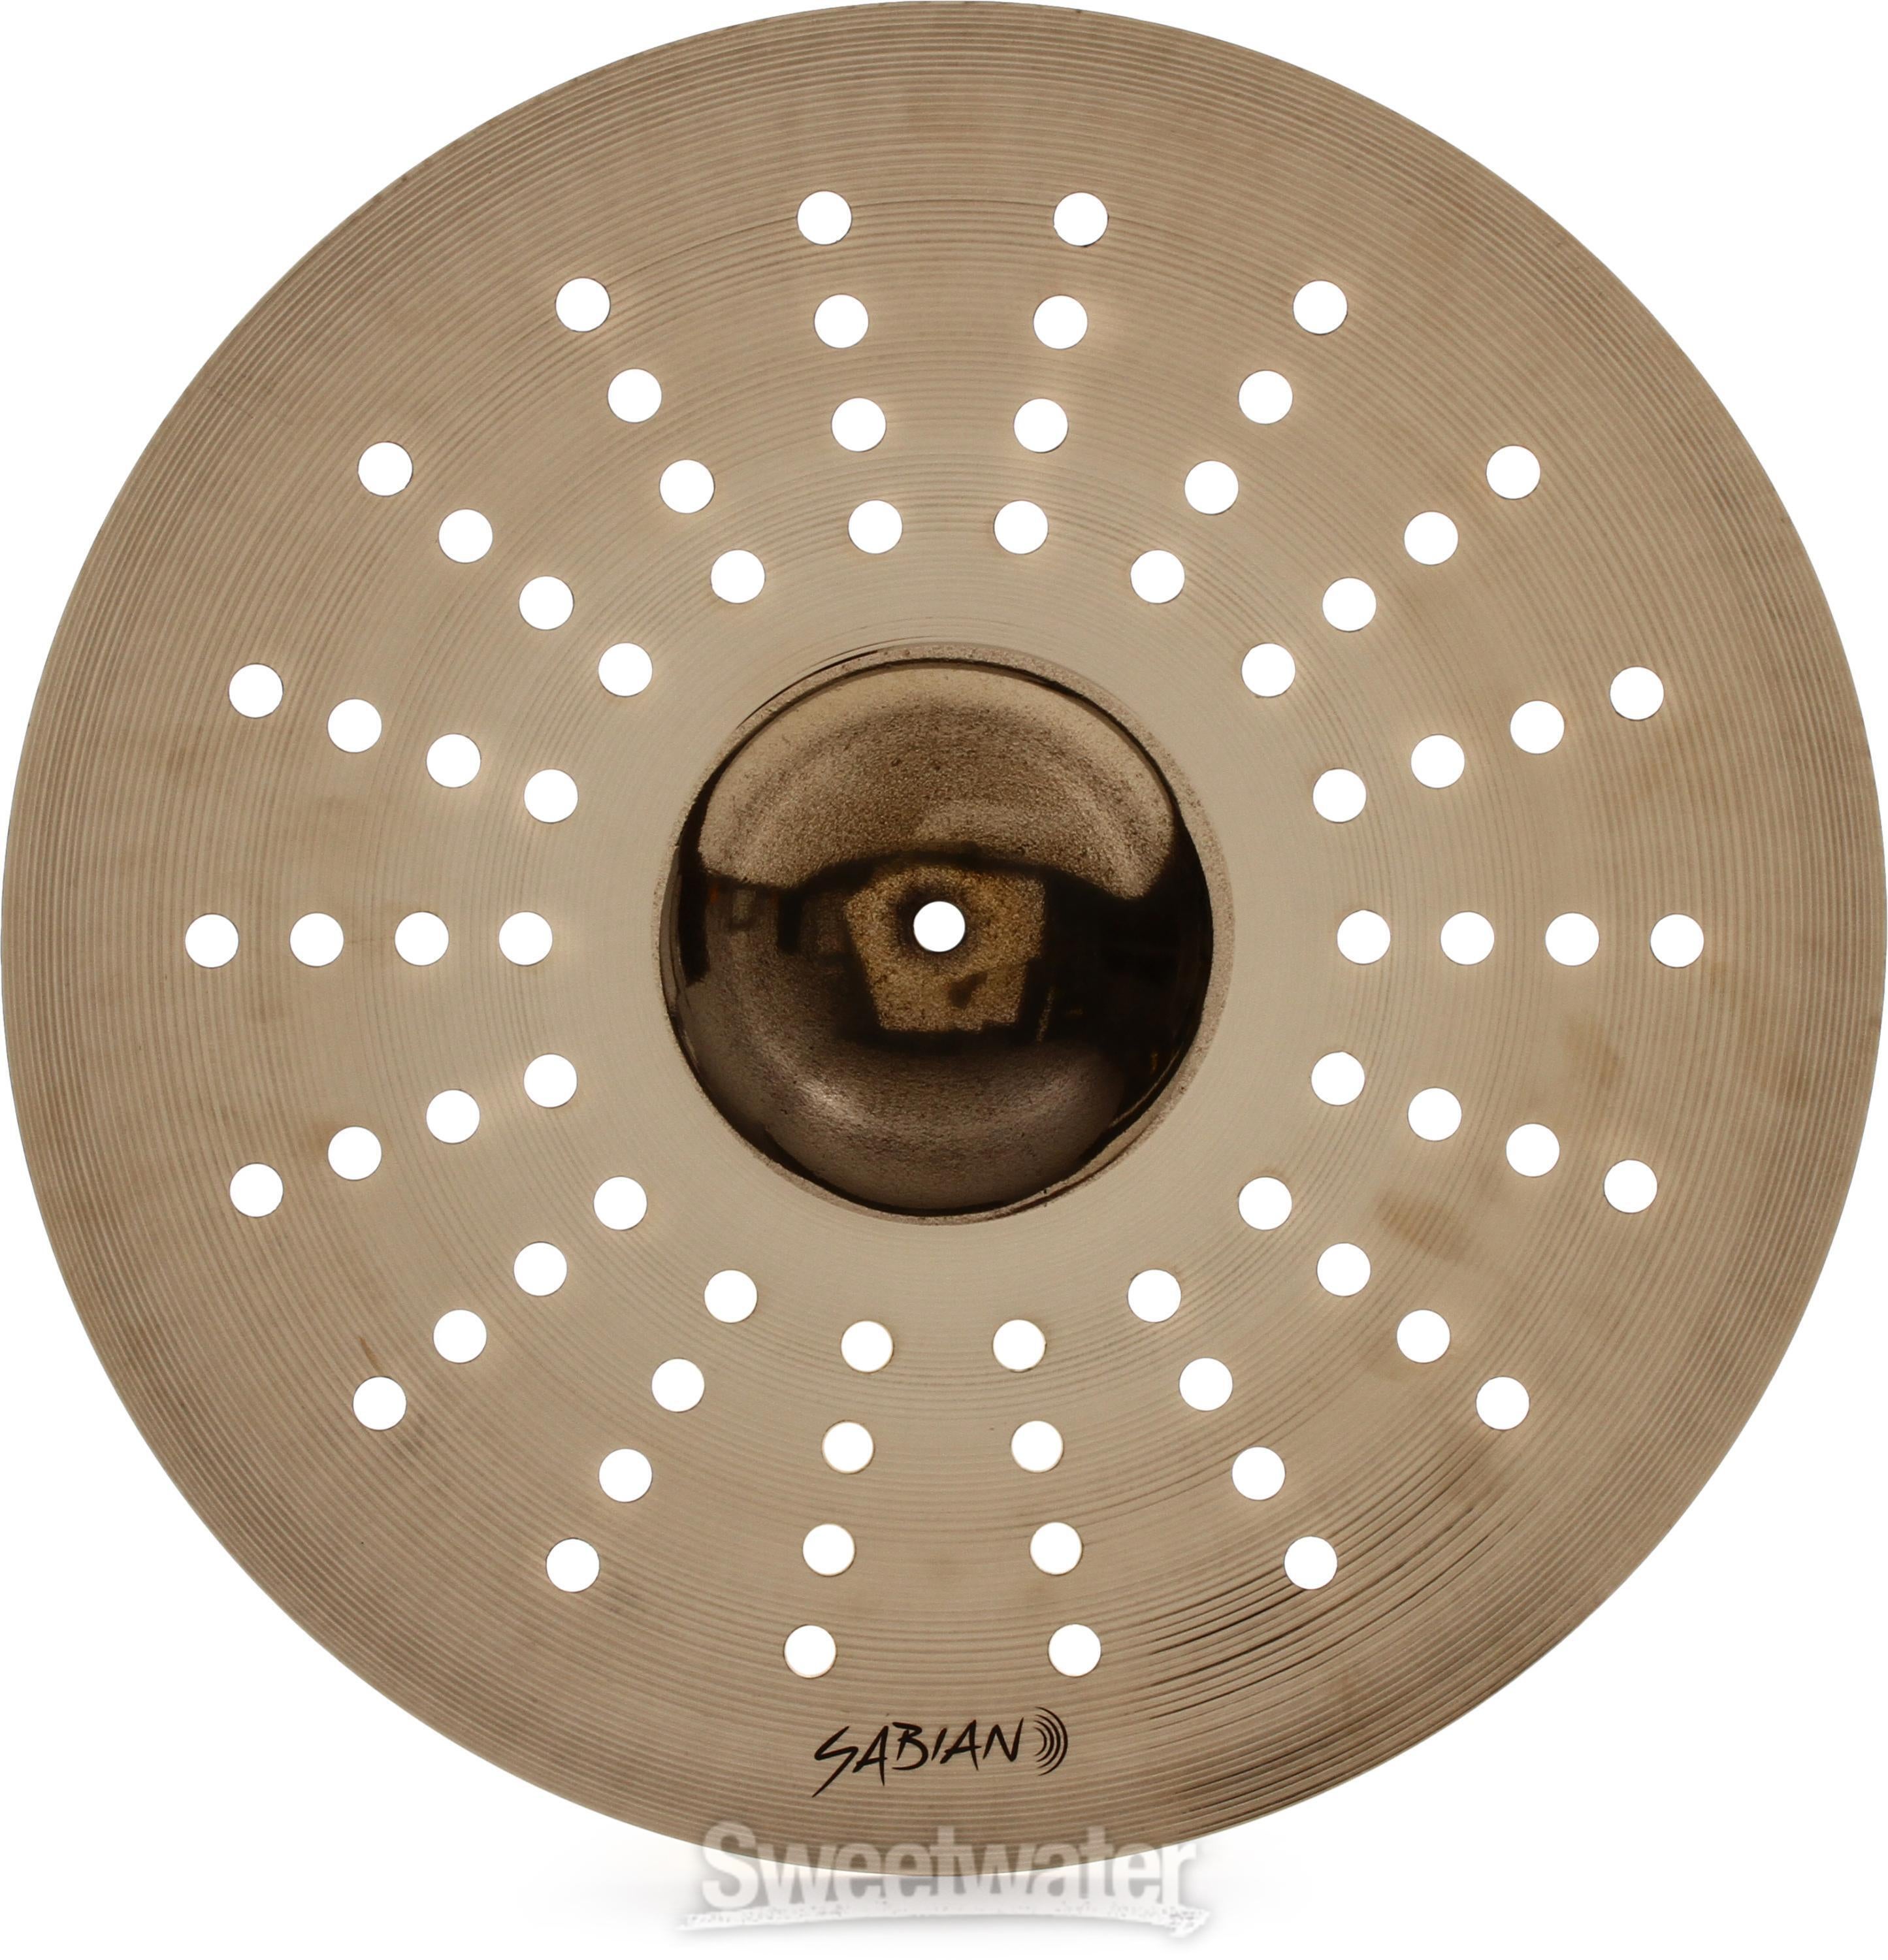 Sabian 18 inch AAX Aero Crash Cymbal - Brilliant Finish